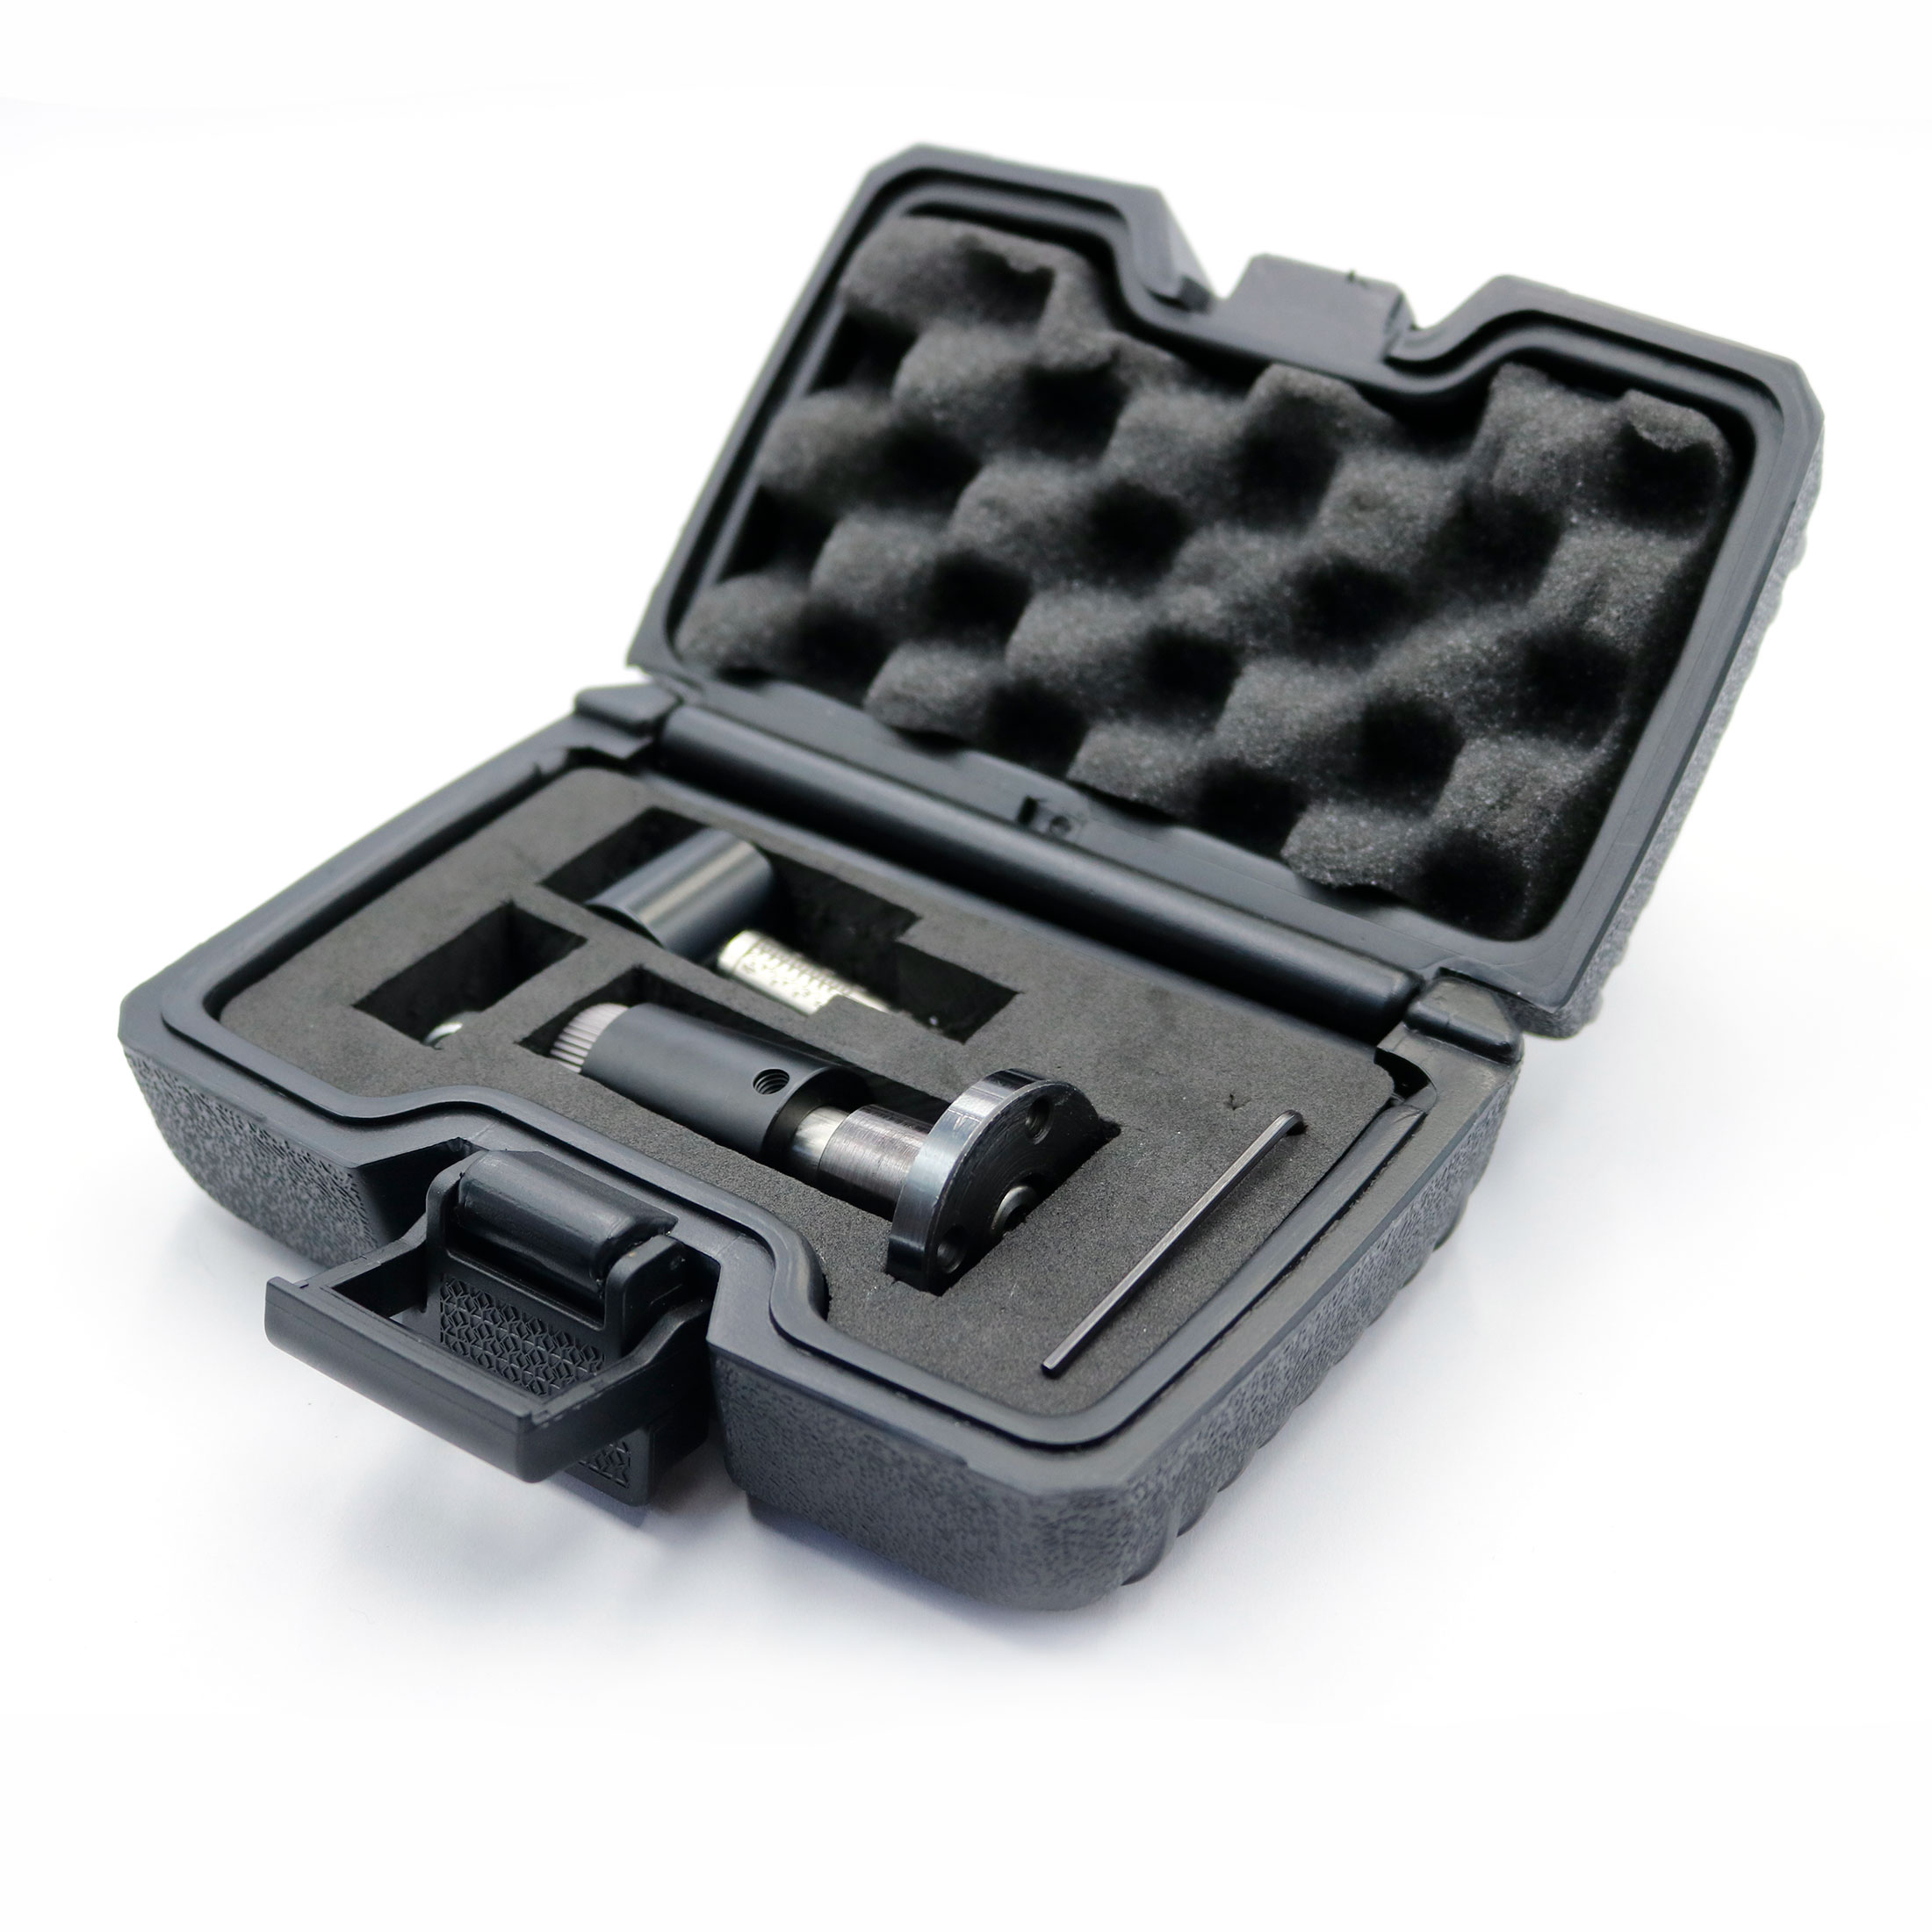 Bracket for Lasermodule 12.5mm to 16.5mm